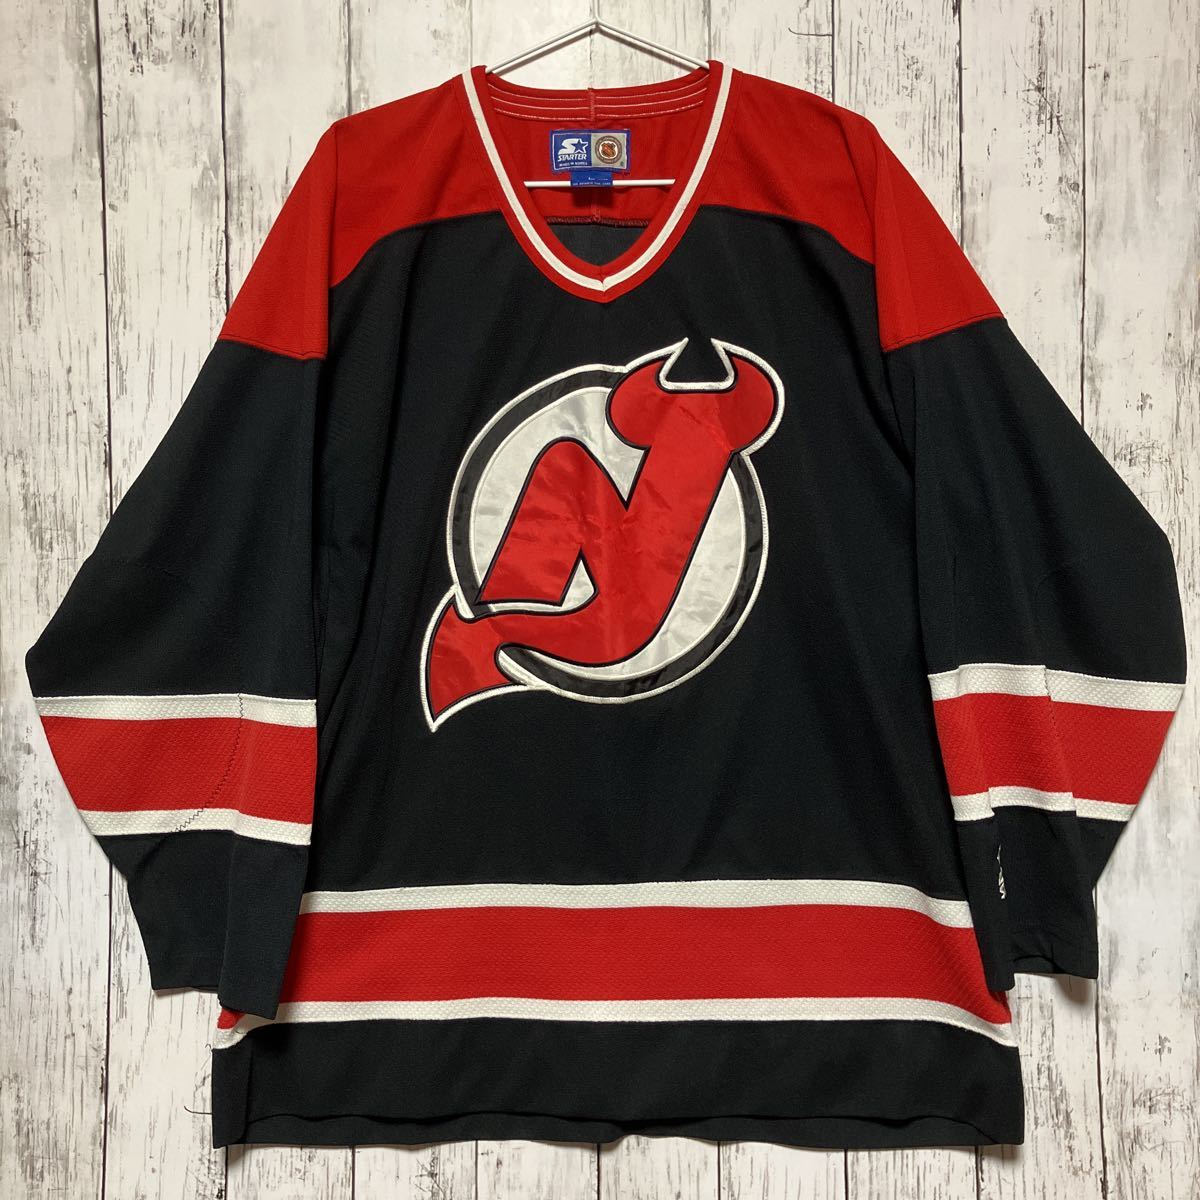 【STARTER】 スターター NHL New Jersey Devils ニュージャージーデビルズ ユニフォーム Lサイズ_画像1